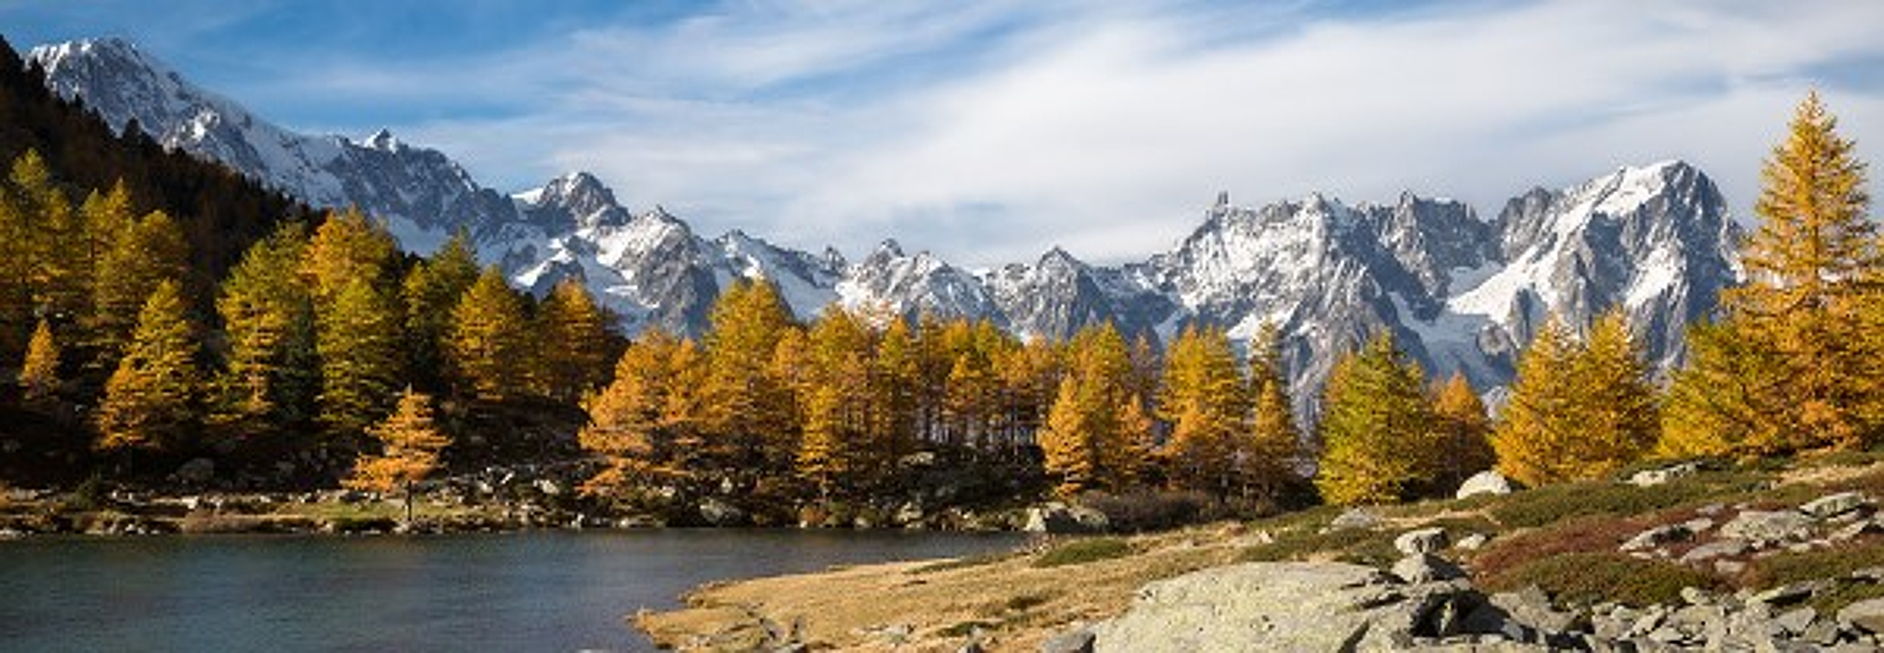  Courmayeur
- foto-autunno-al-lago-darpy-vista-sul-monte-bianco-9959.jpg